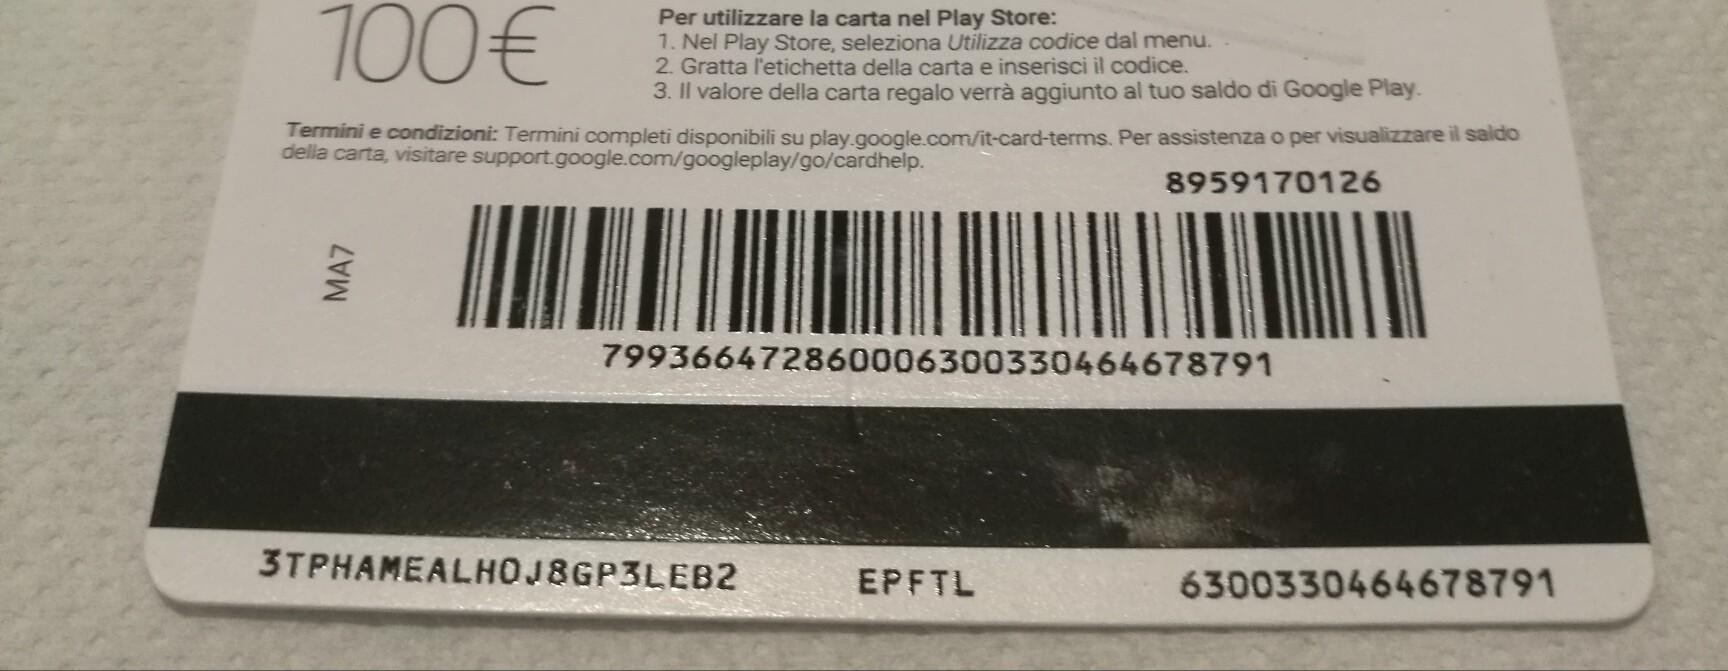 Google Play Card da 100 euro in 70010 Valenzano for €60.00 for sale ...